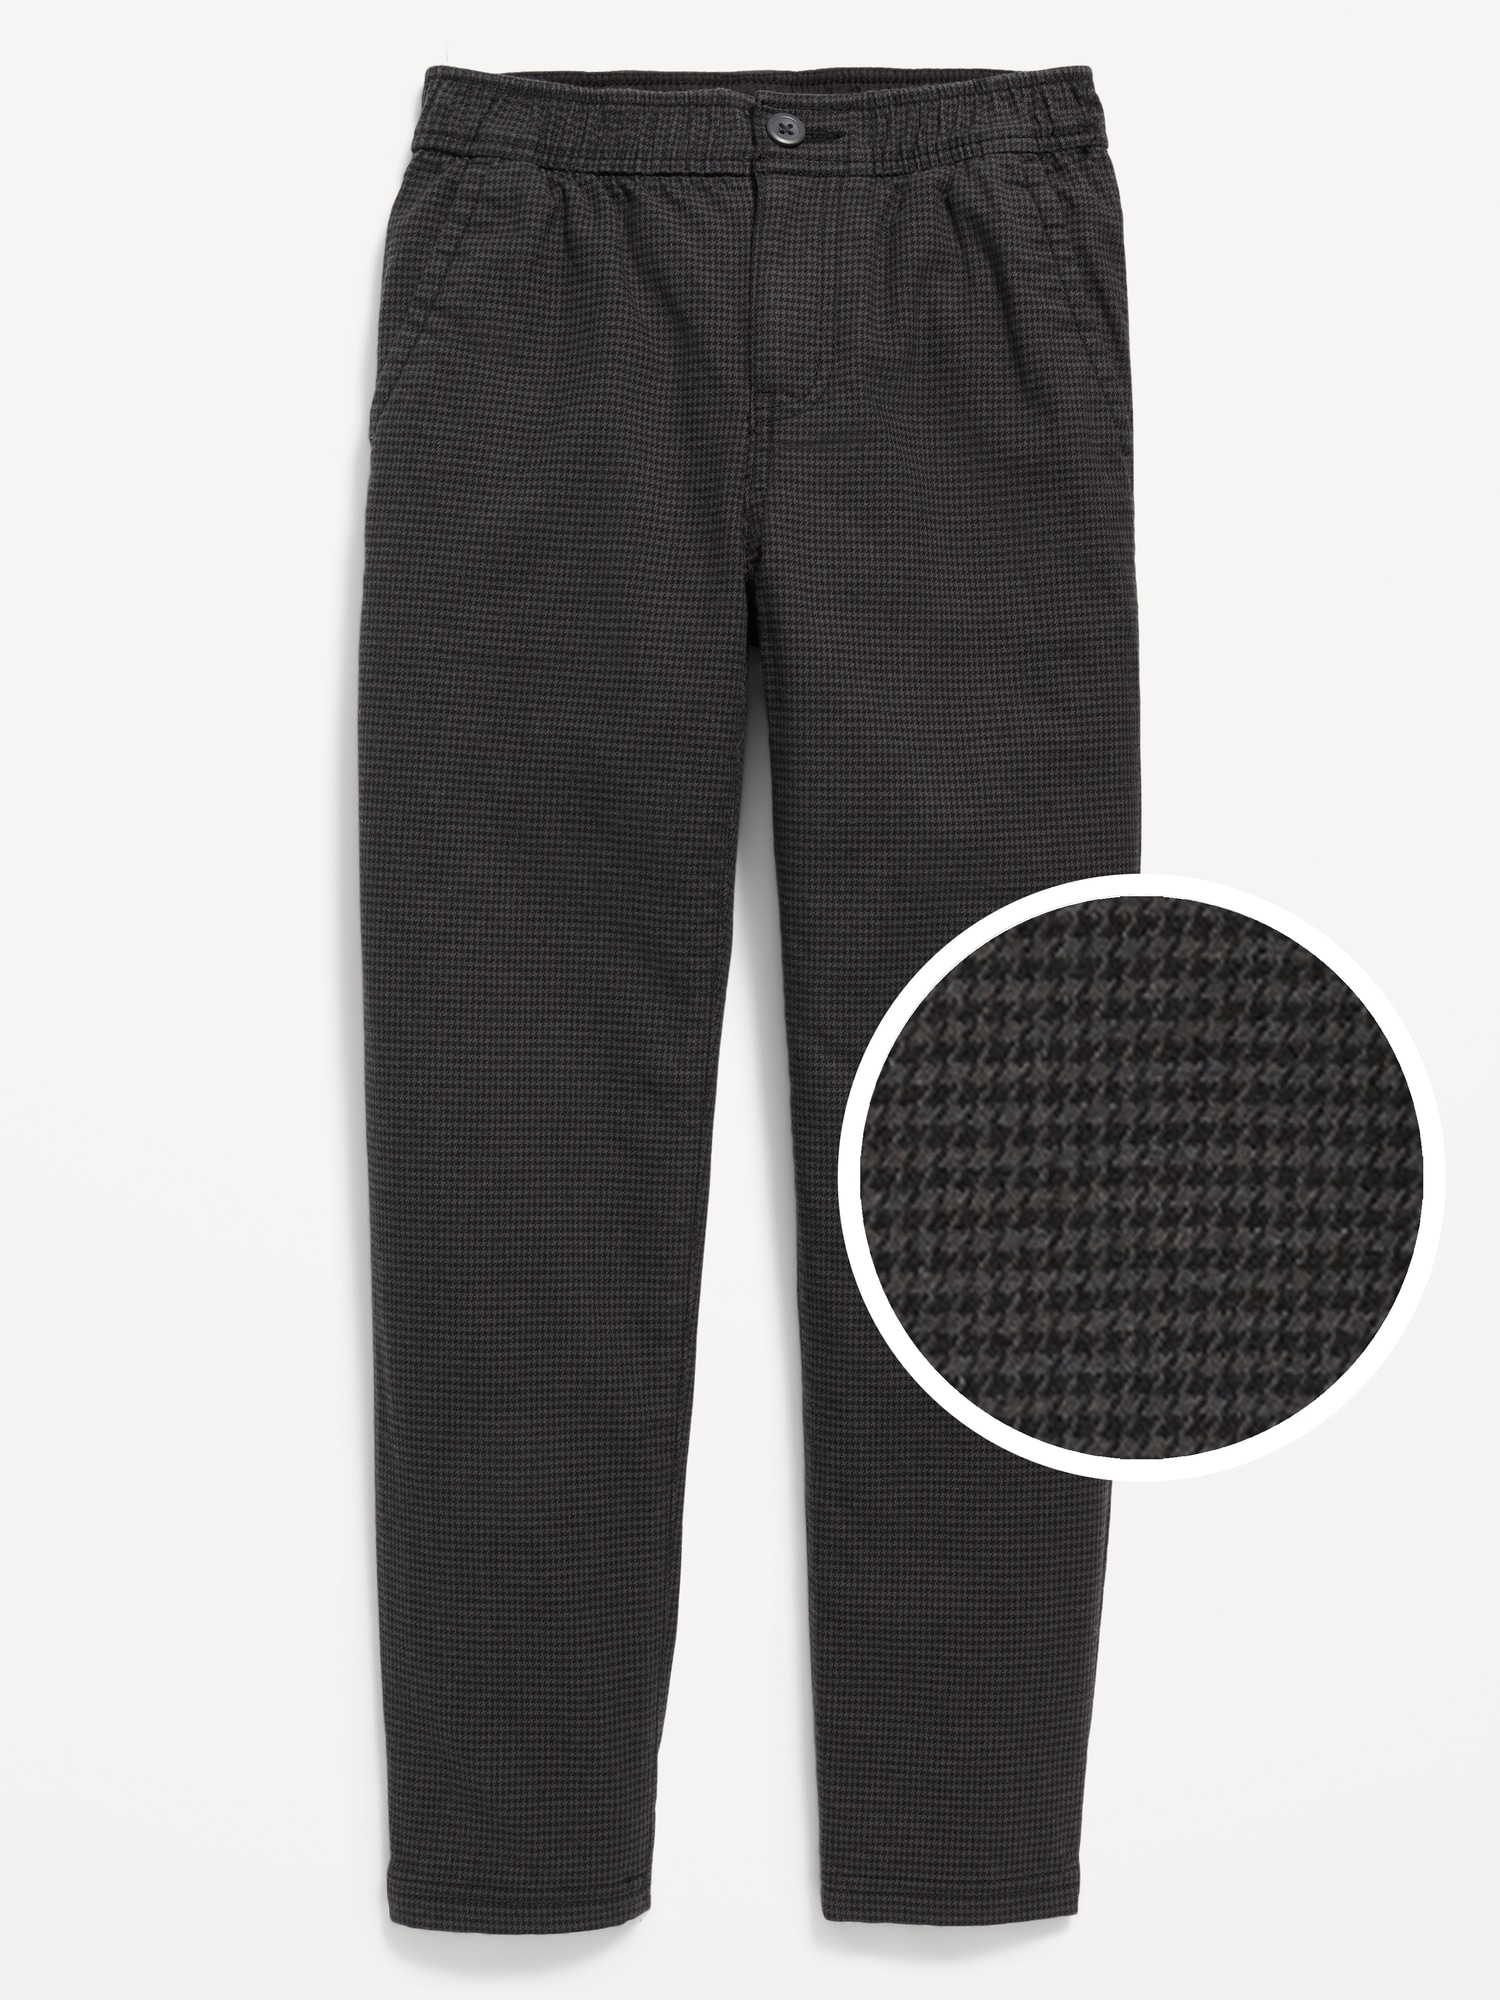 Old Navy Textured Patterned Built-In Flex Taper Pants for Boys black. 1